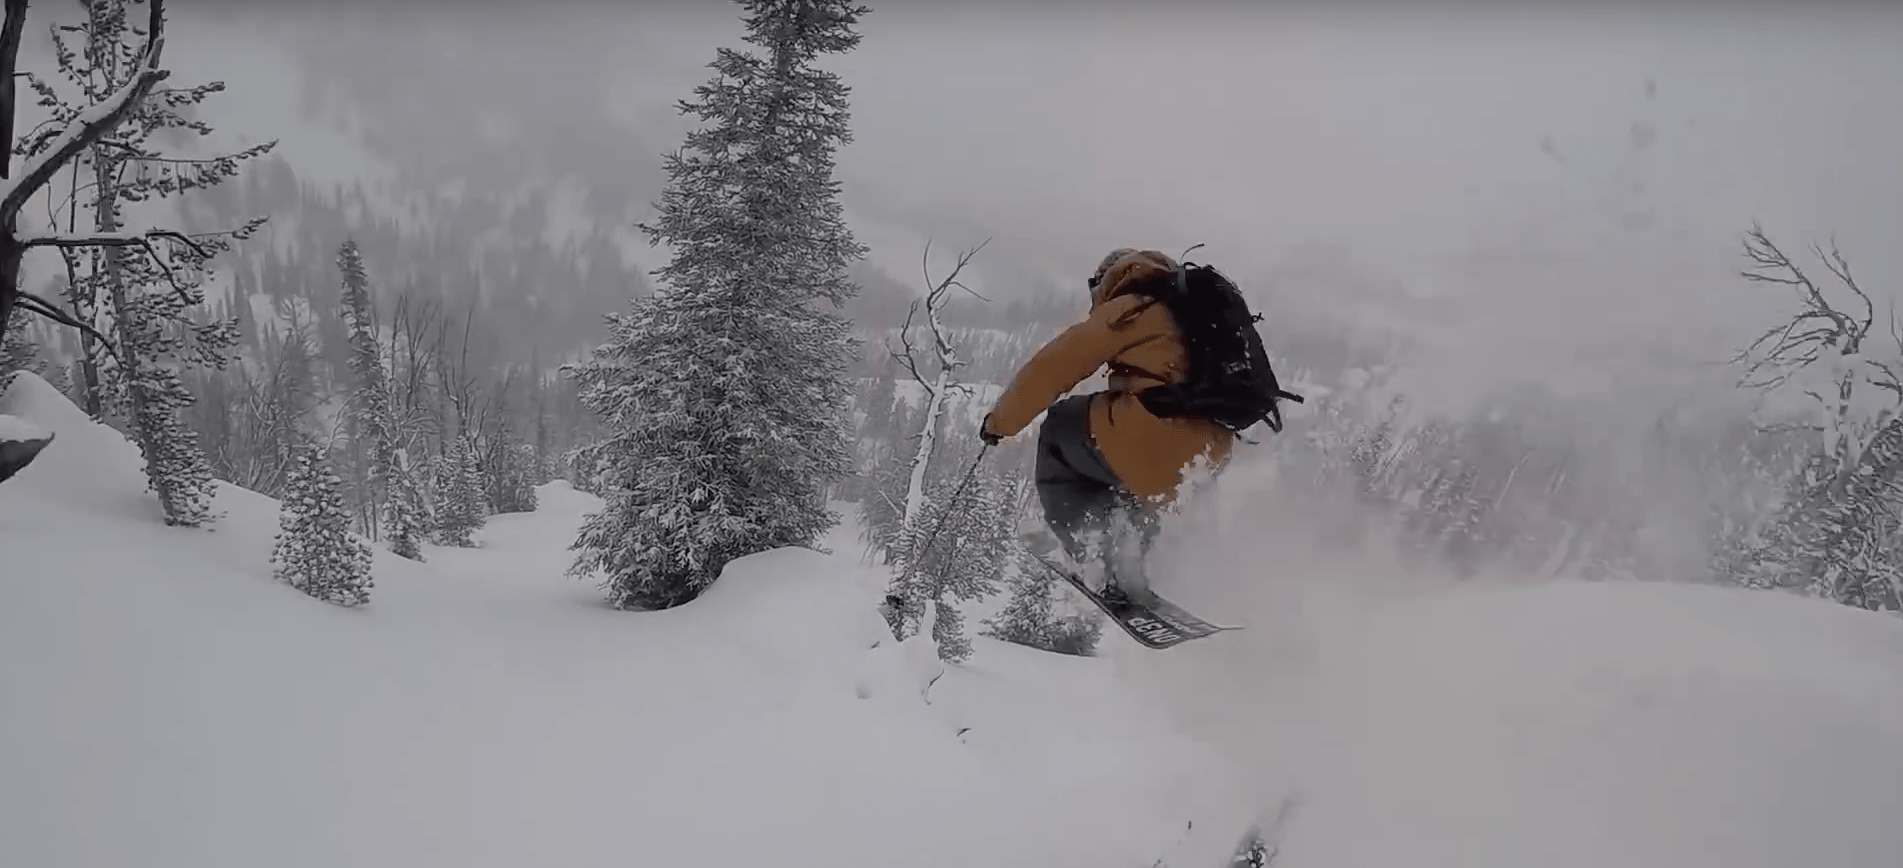 video, year, skiing